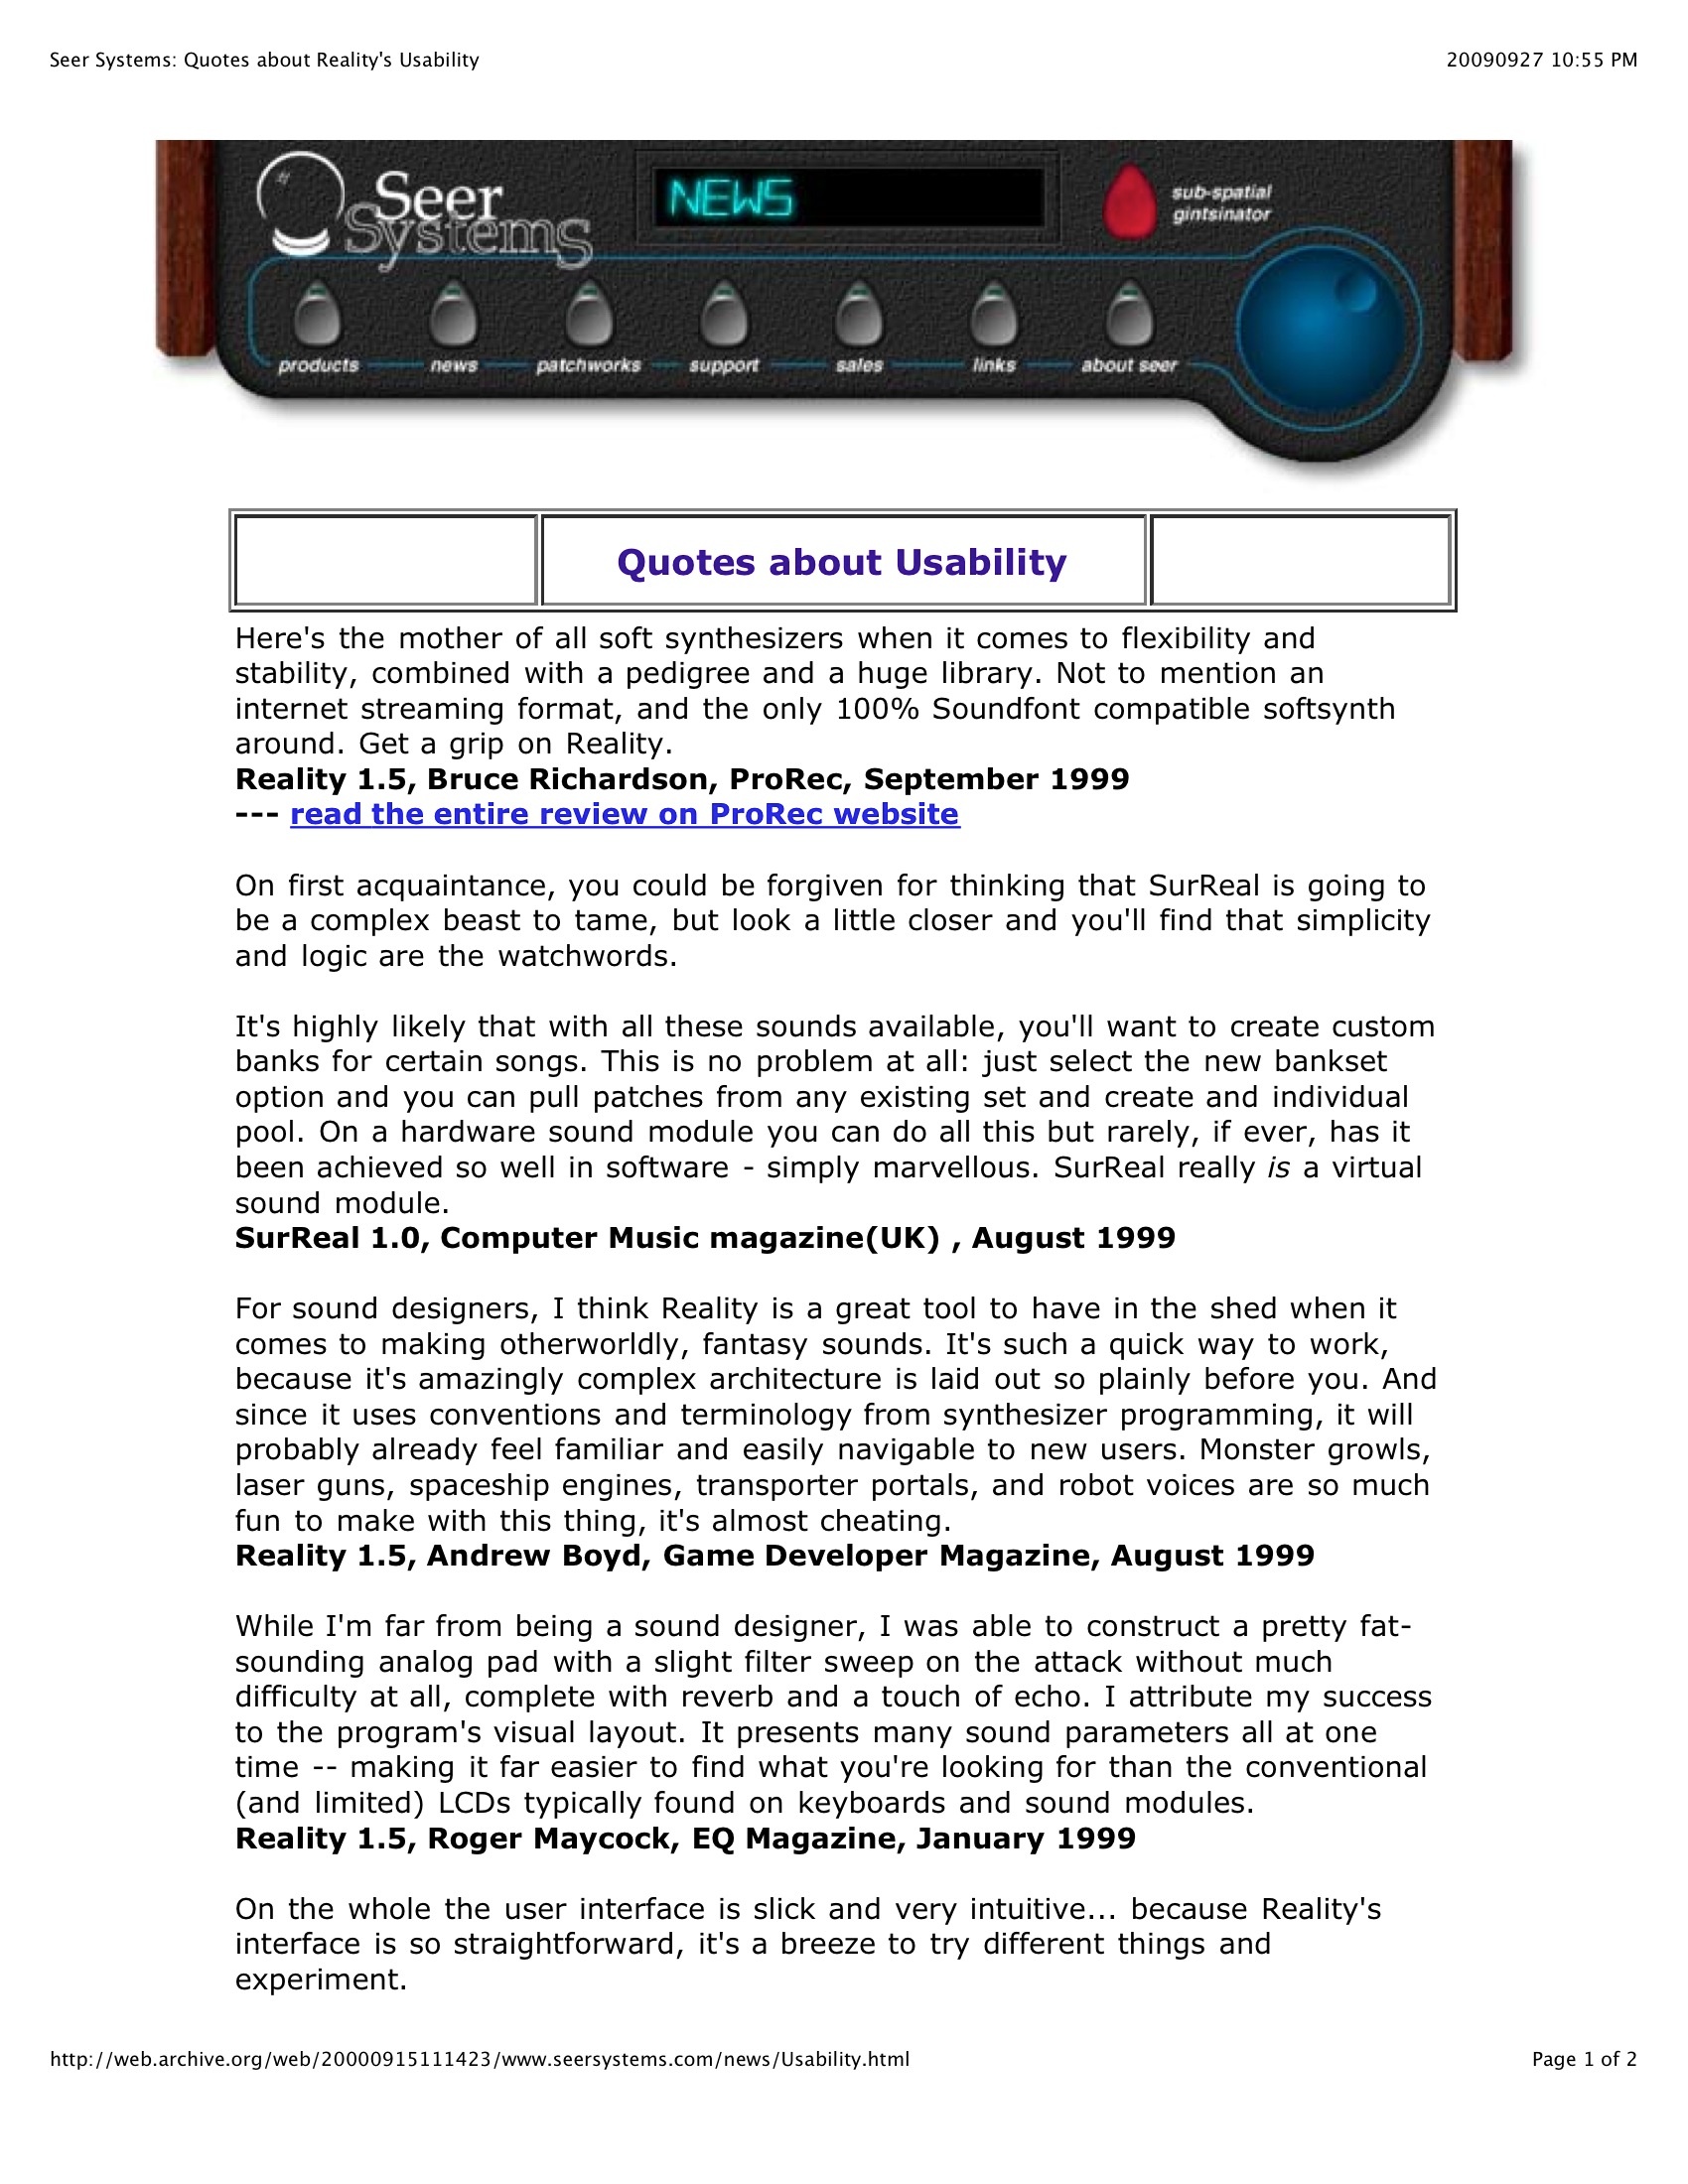 20000915 usability Page-01